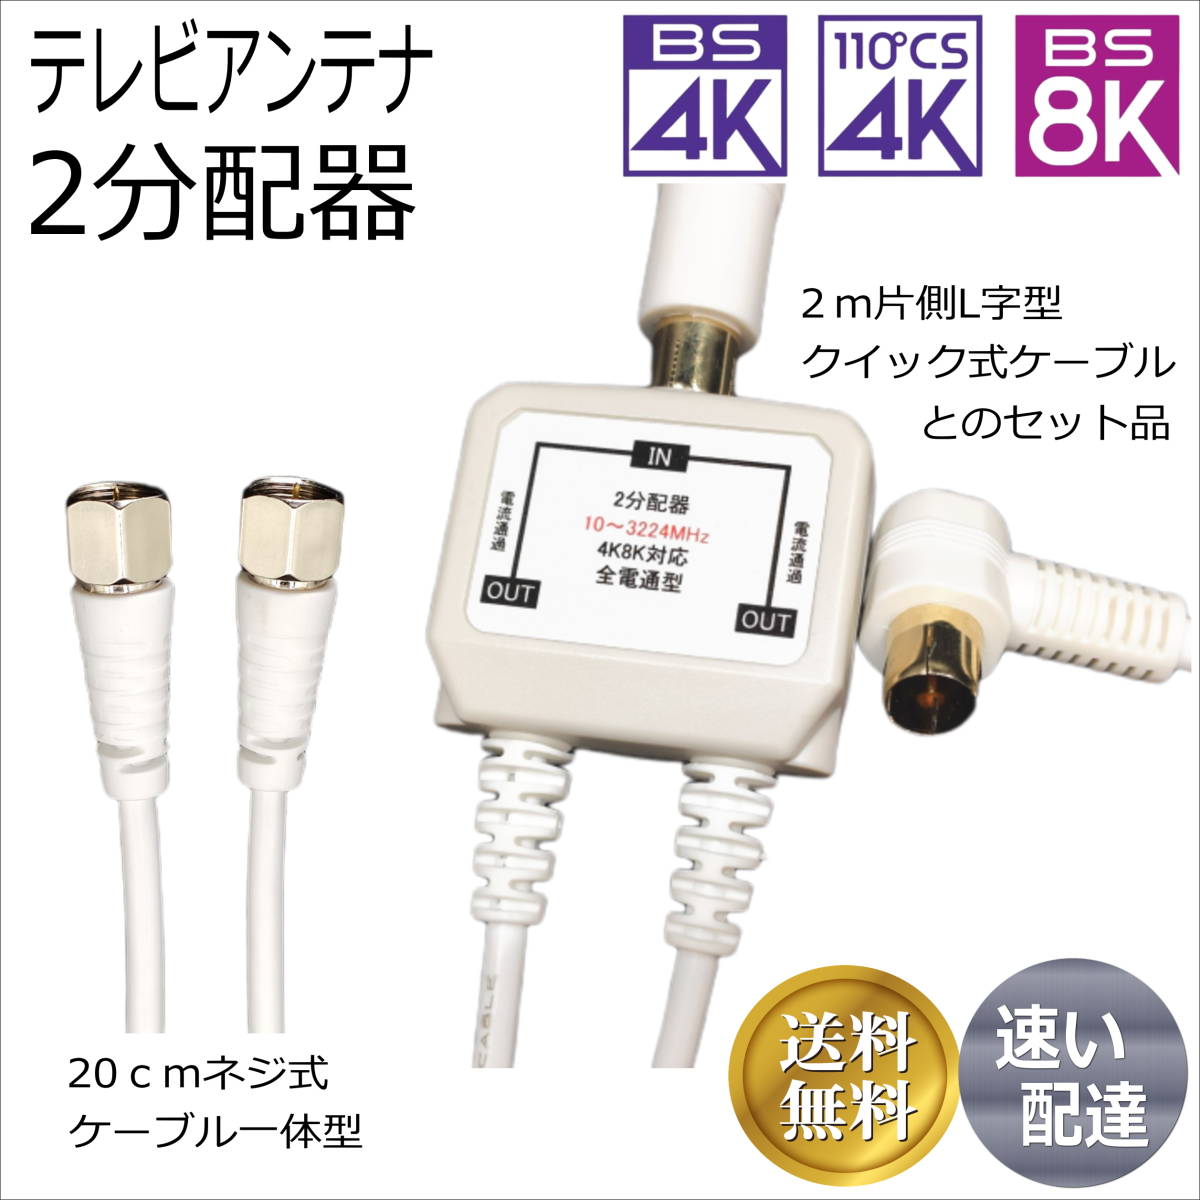 ELECOM DH-ATLS48K50WH ホワイト 5m - 通販 - gofukuyasan.com